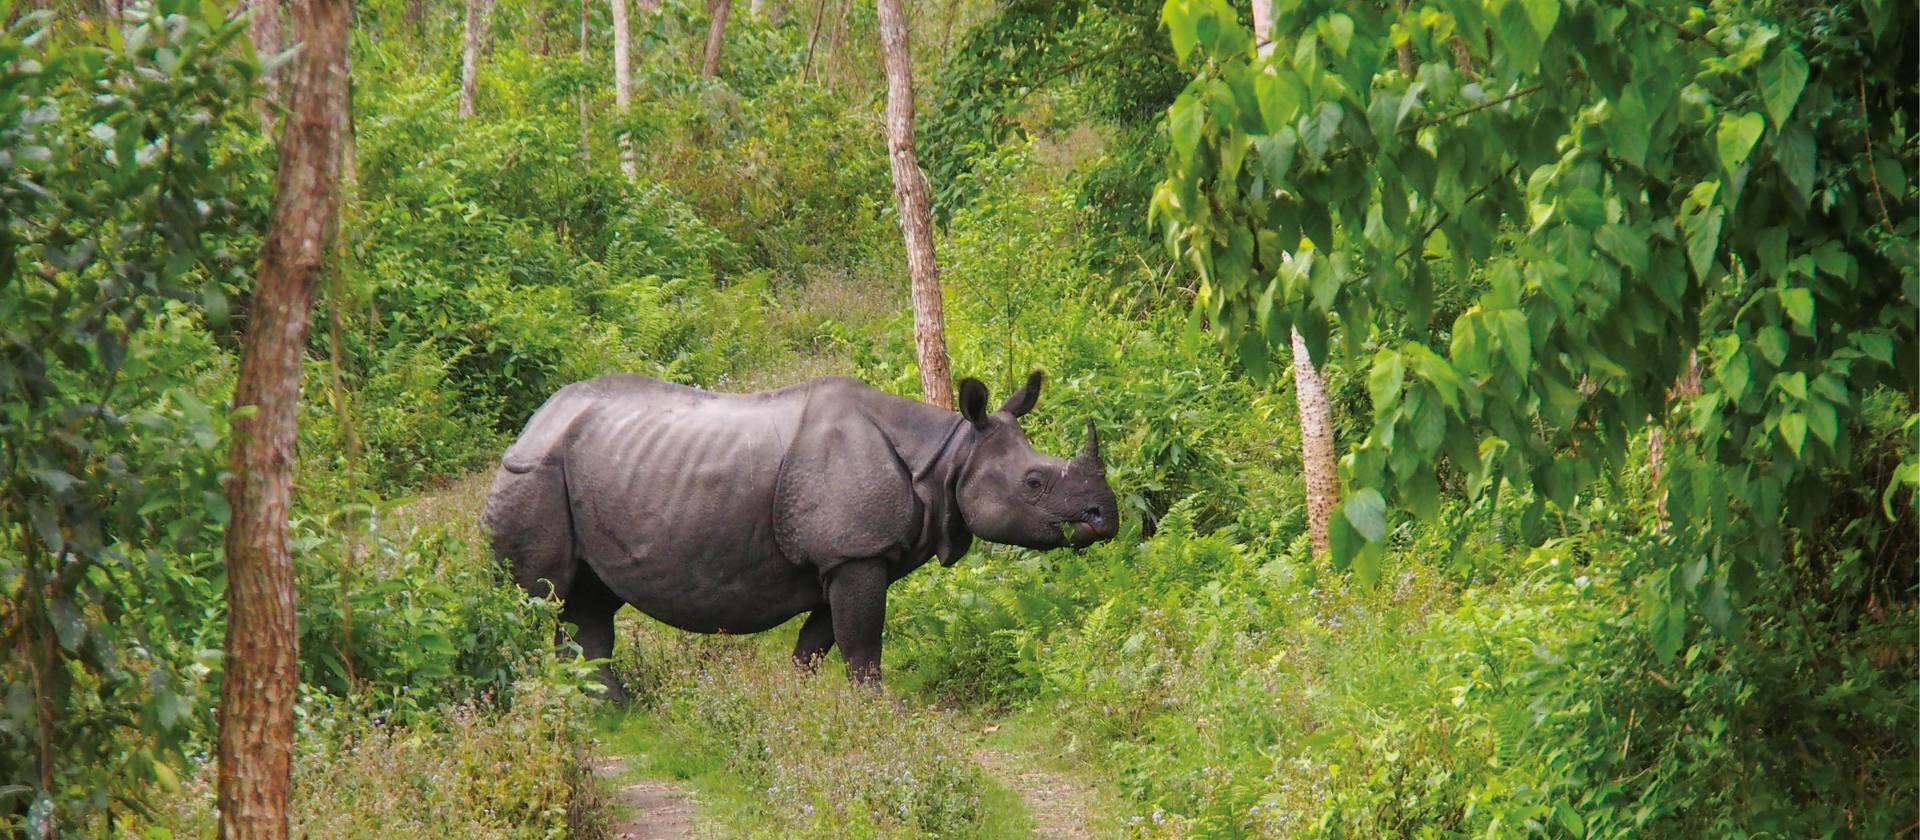 Viewing the majestic Asiatic Rhino in its natural habitats | Zac Kostos